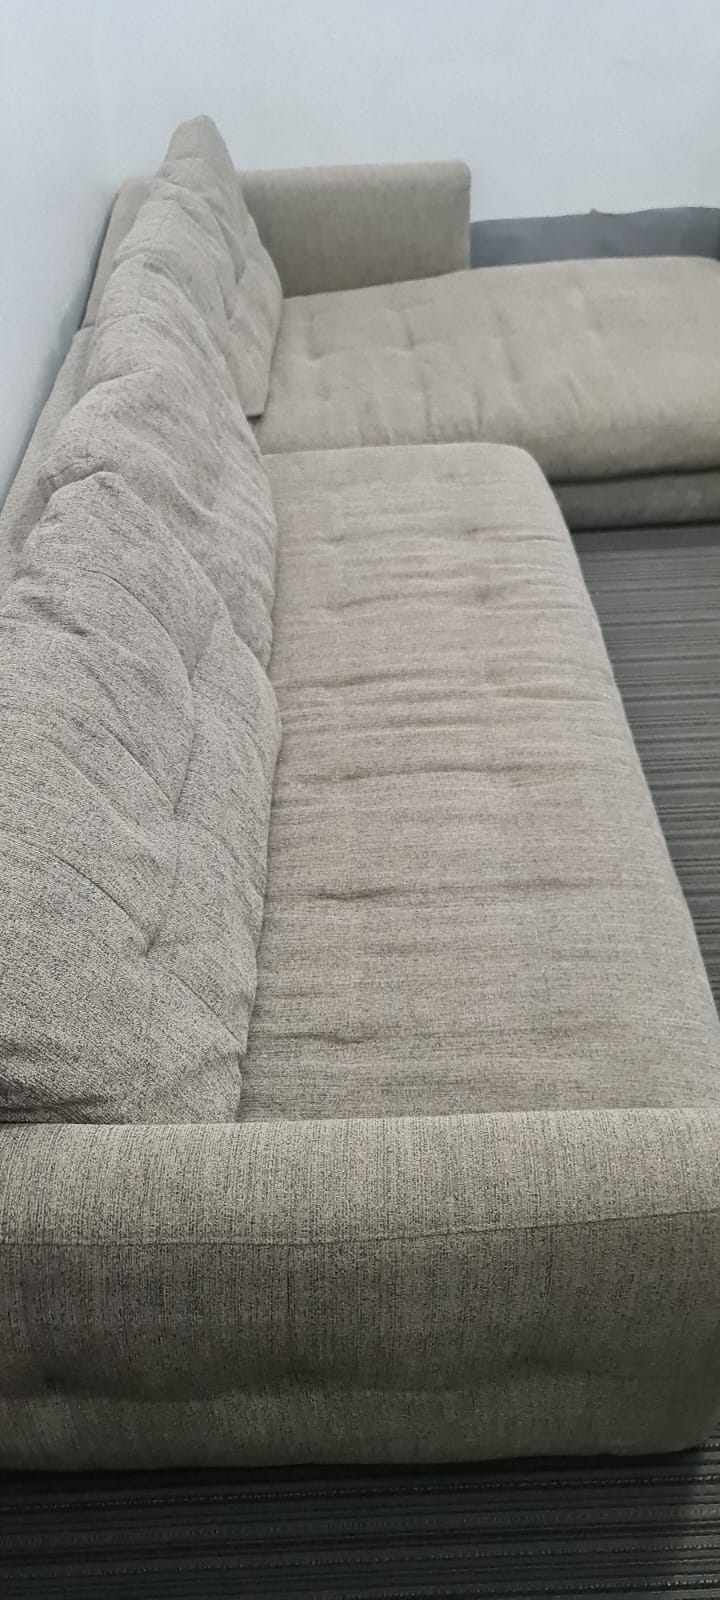 Sofa Set for sale